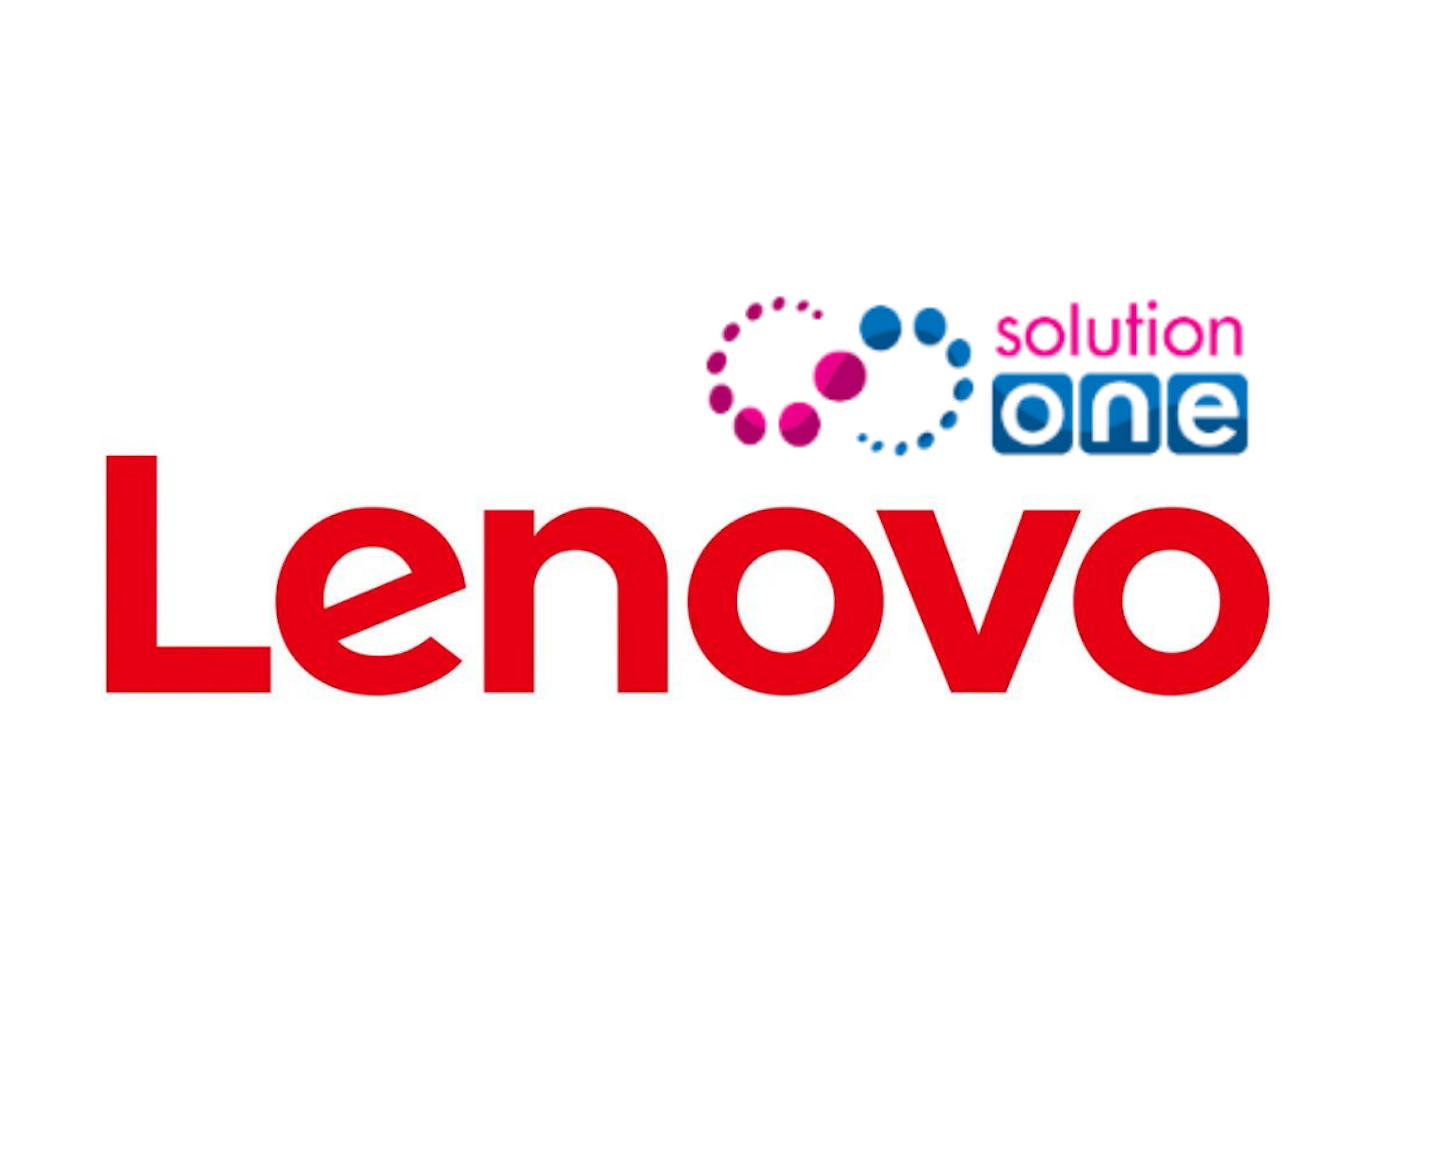 solution one and lenovo logo